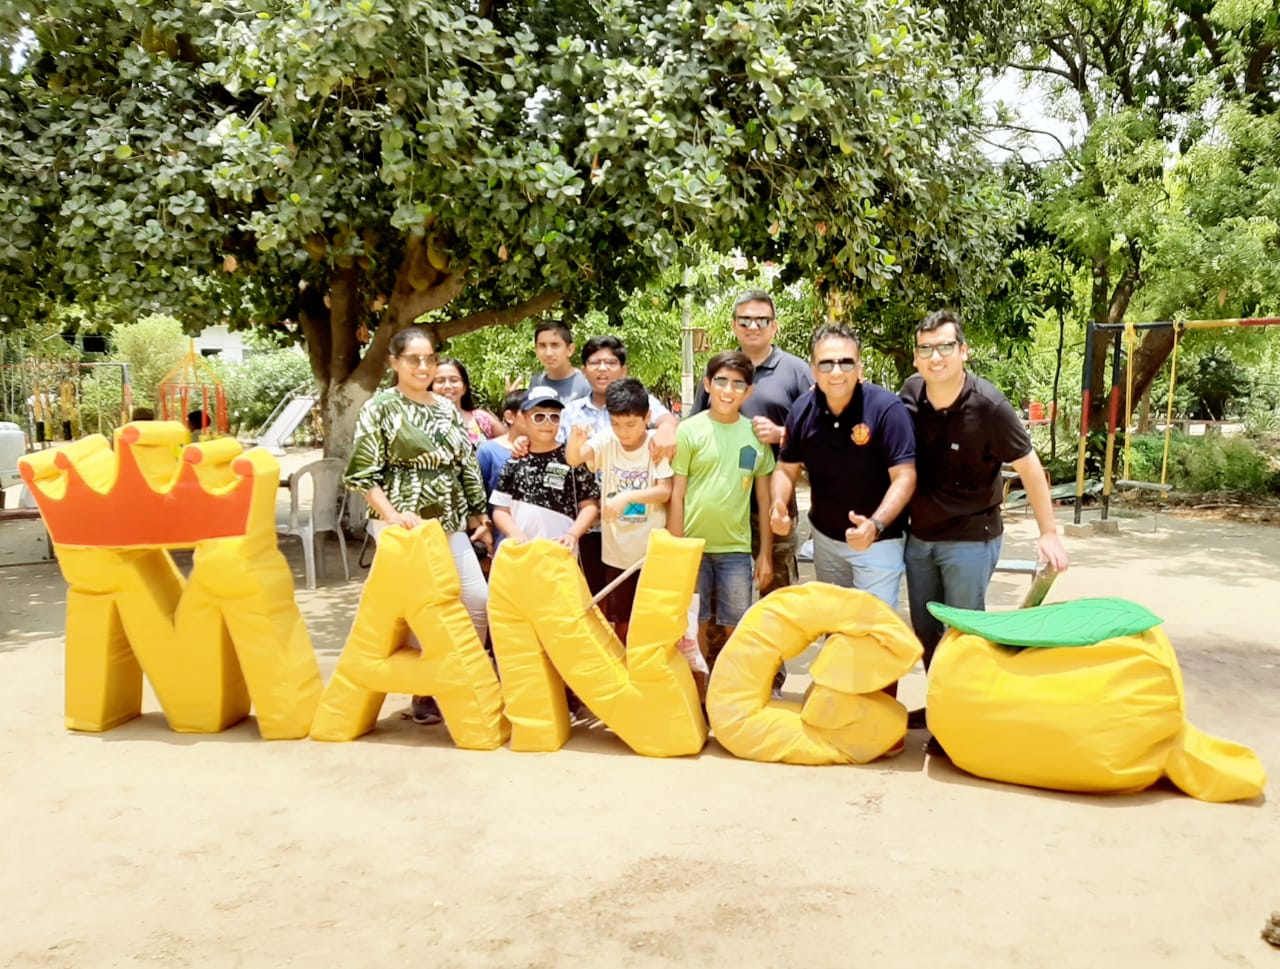 Mango festival will be organized every Sunday of June